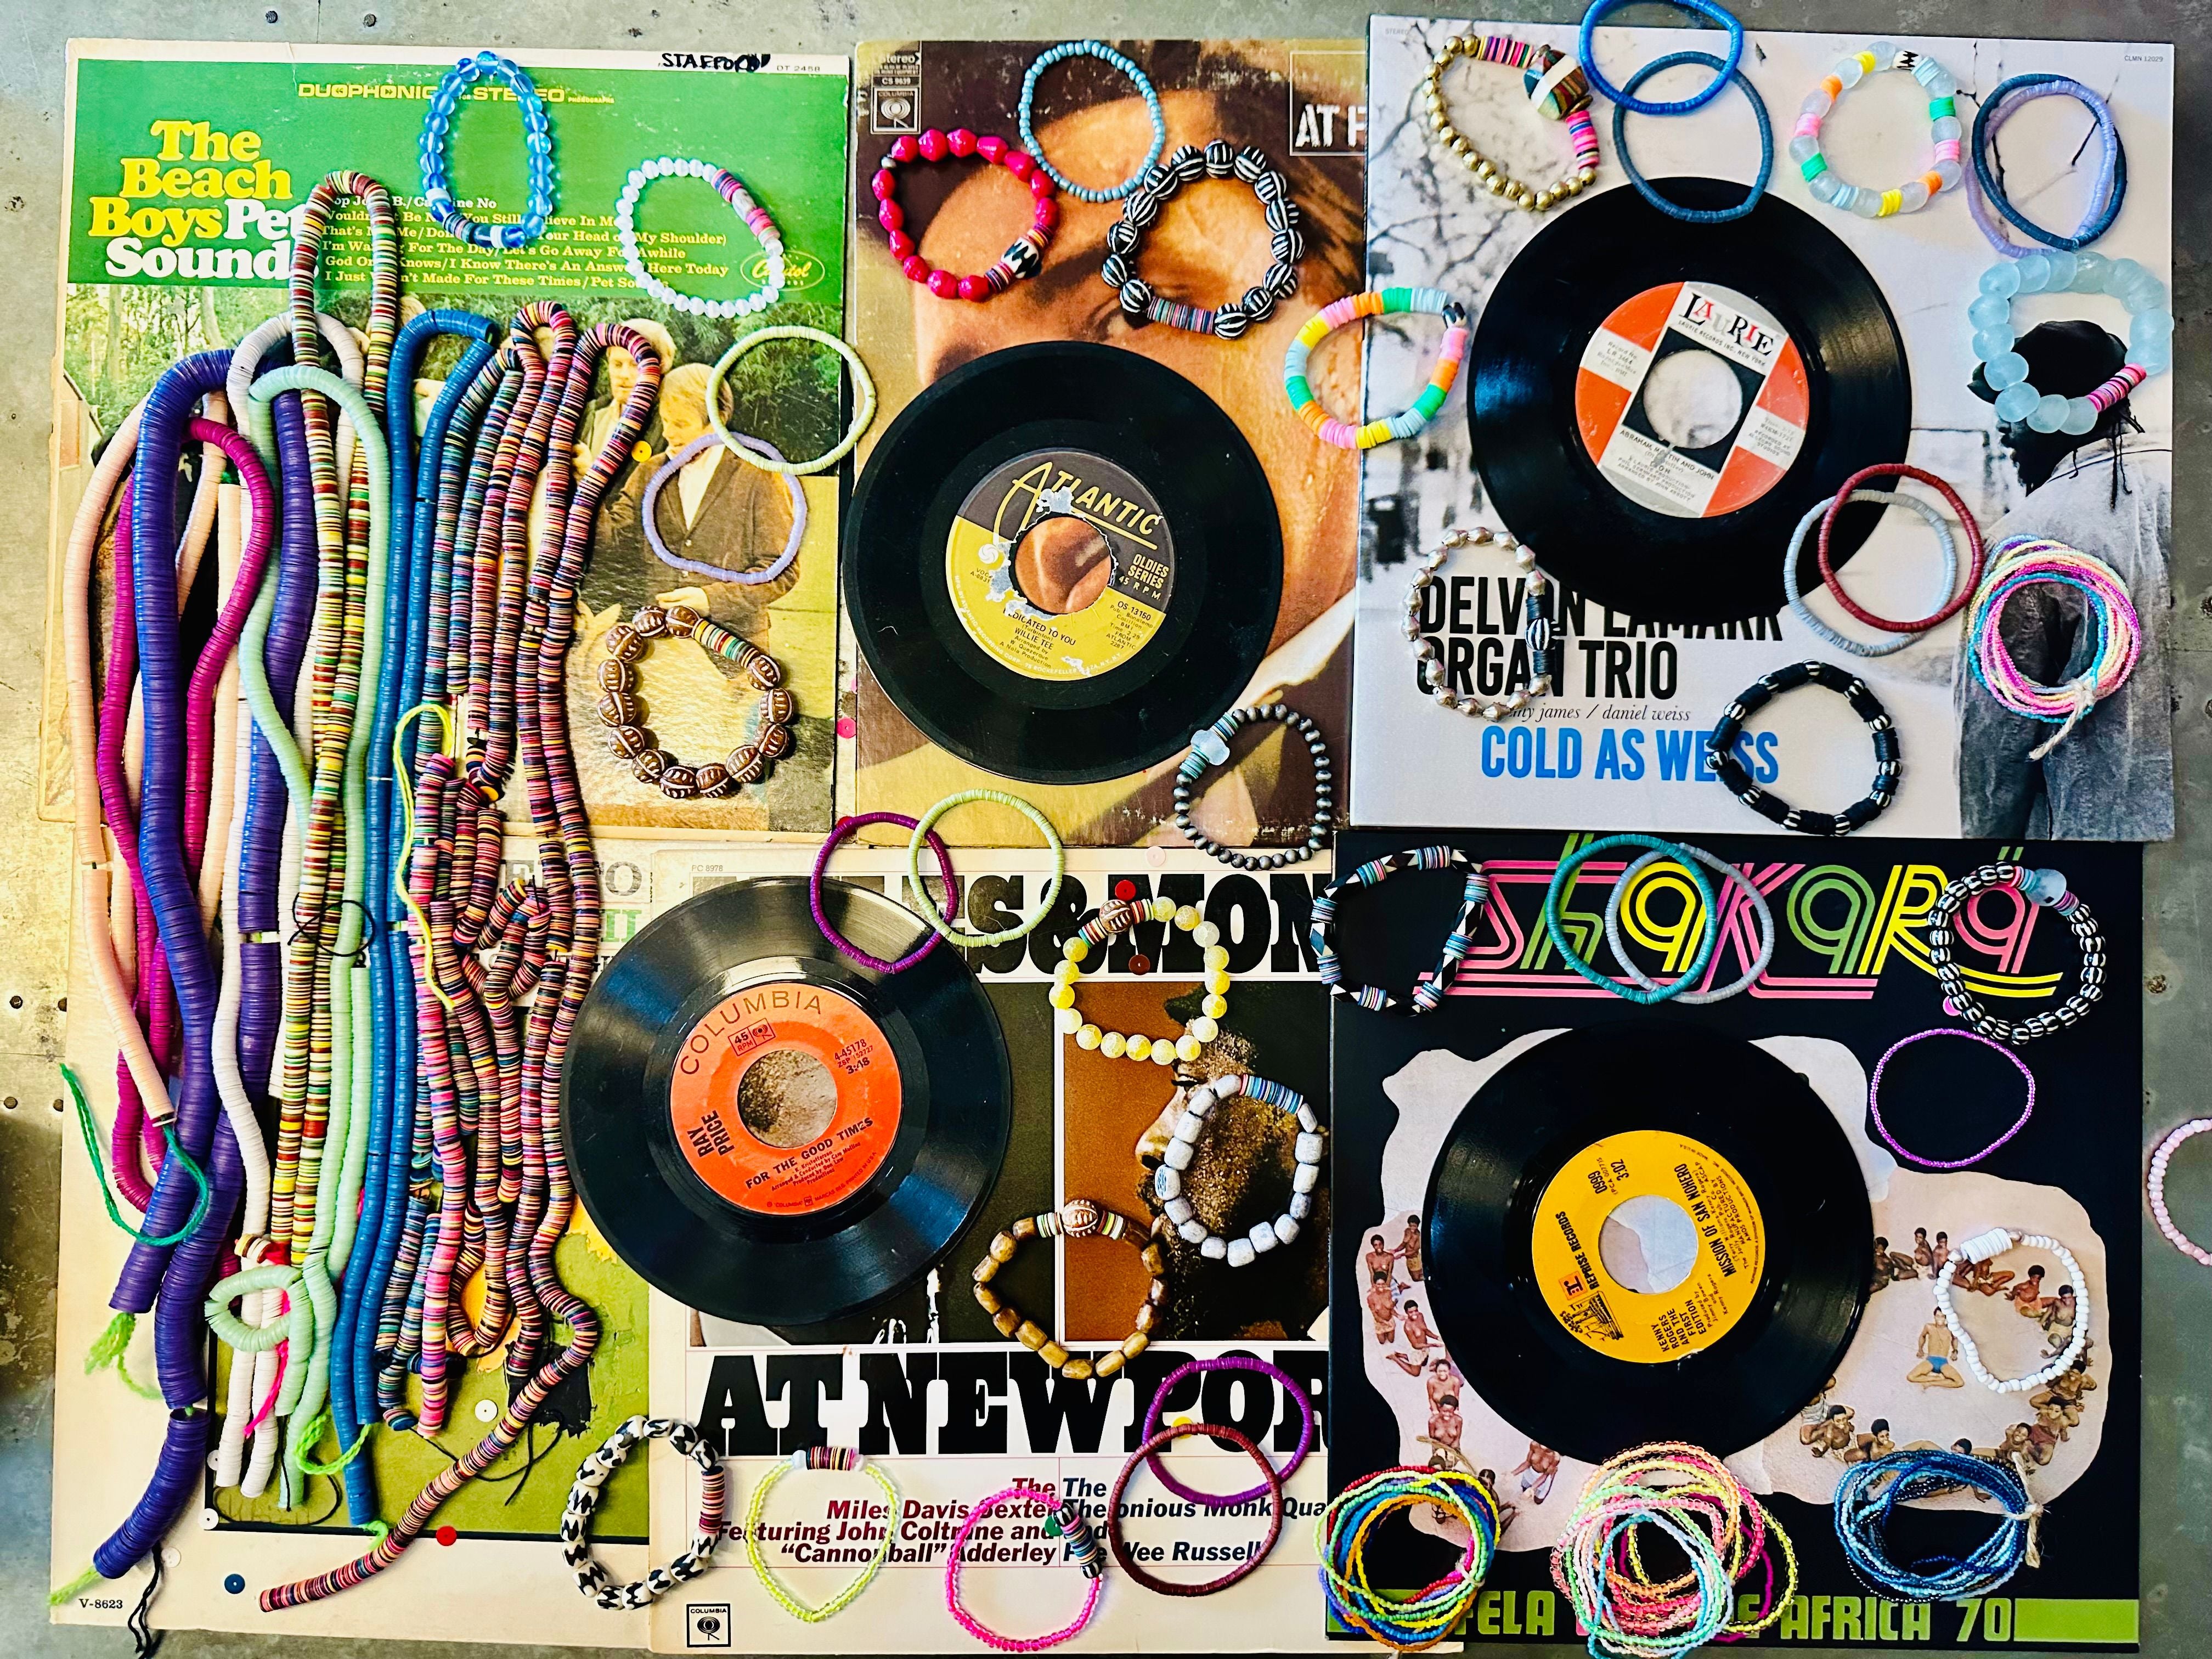 David Bowie Album Collage Puzzle